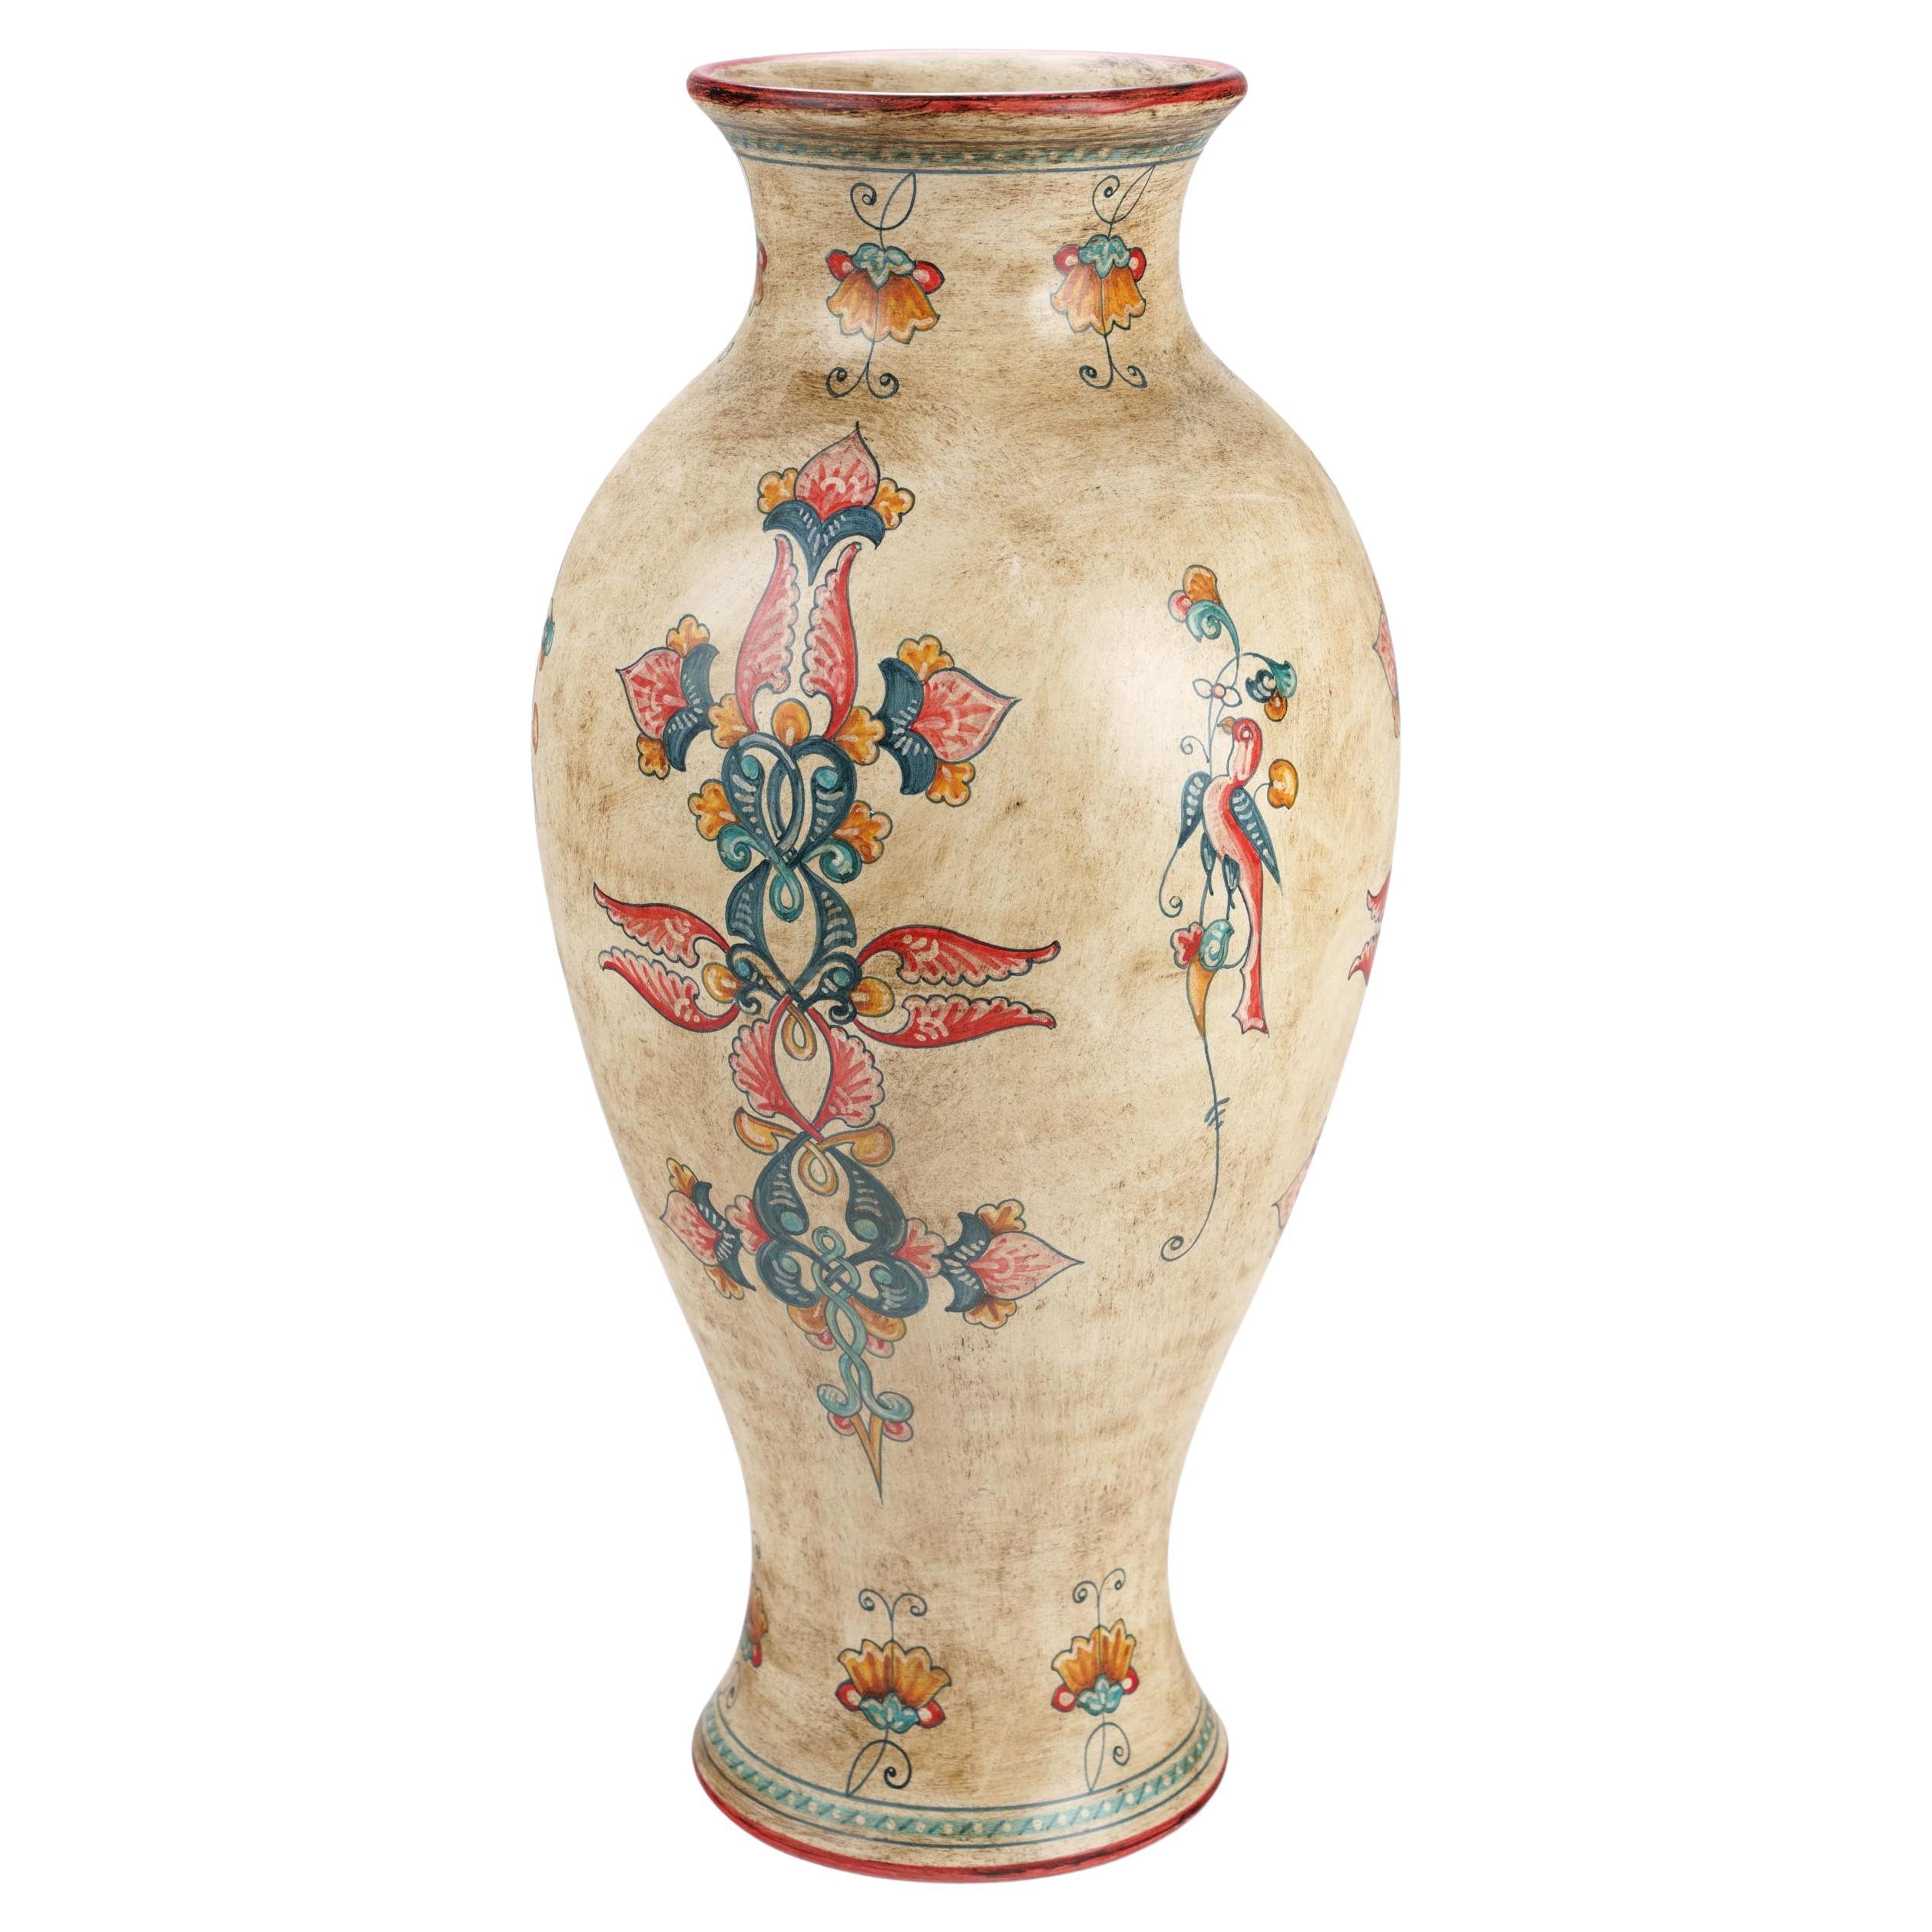 Antiqued Majolica Vase Red Blue Birds, Hand Painted Ceramic Vessel, Deruta Italy